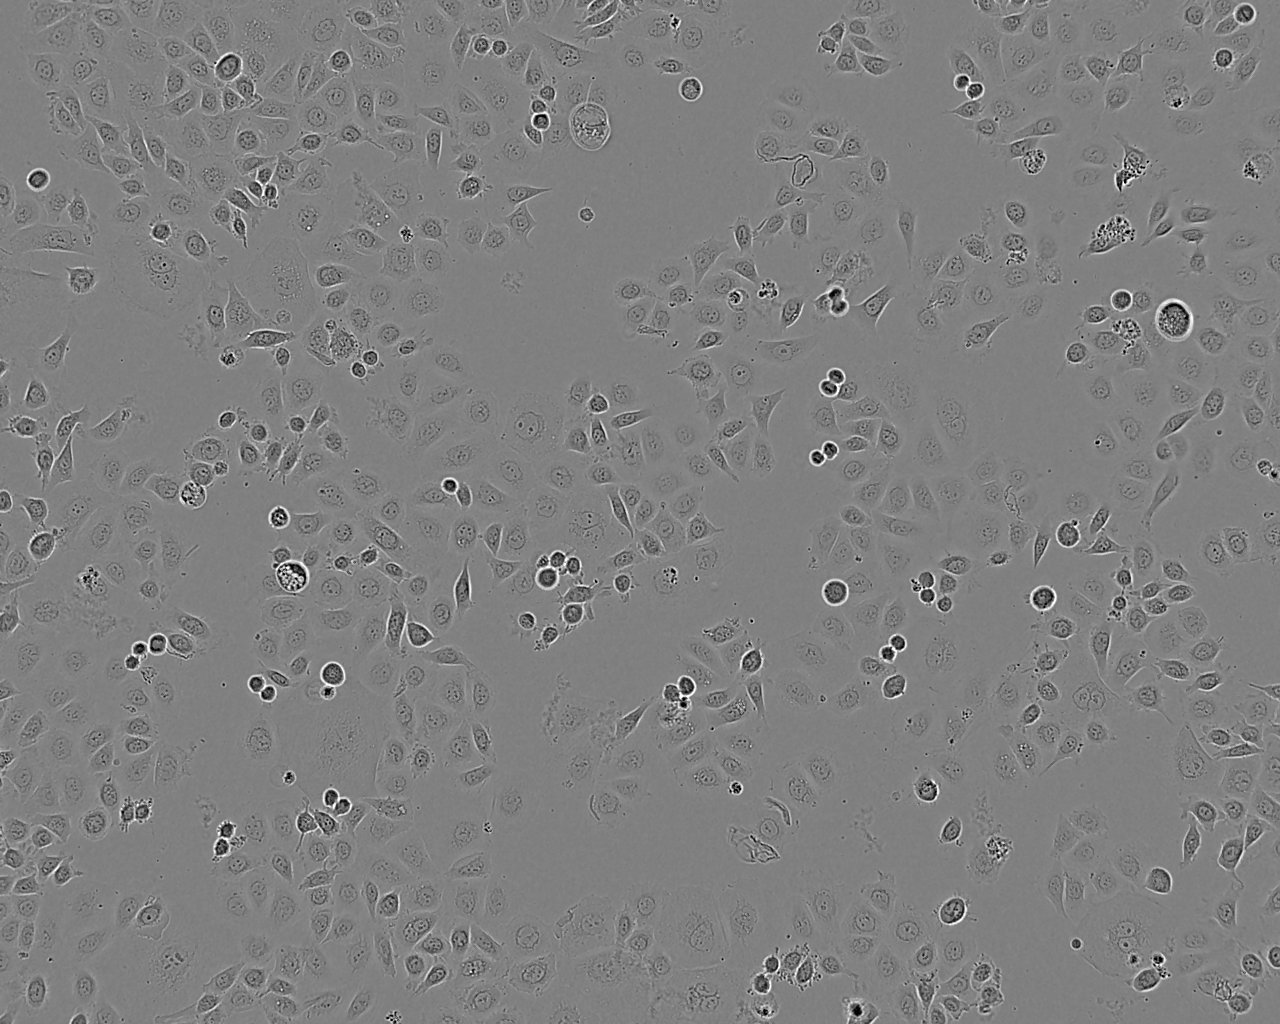 McA-RH7777 Cell:大鼠肝癌细胞系,McA-RH7777 Cell